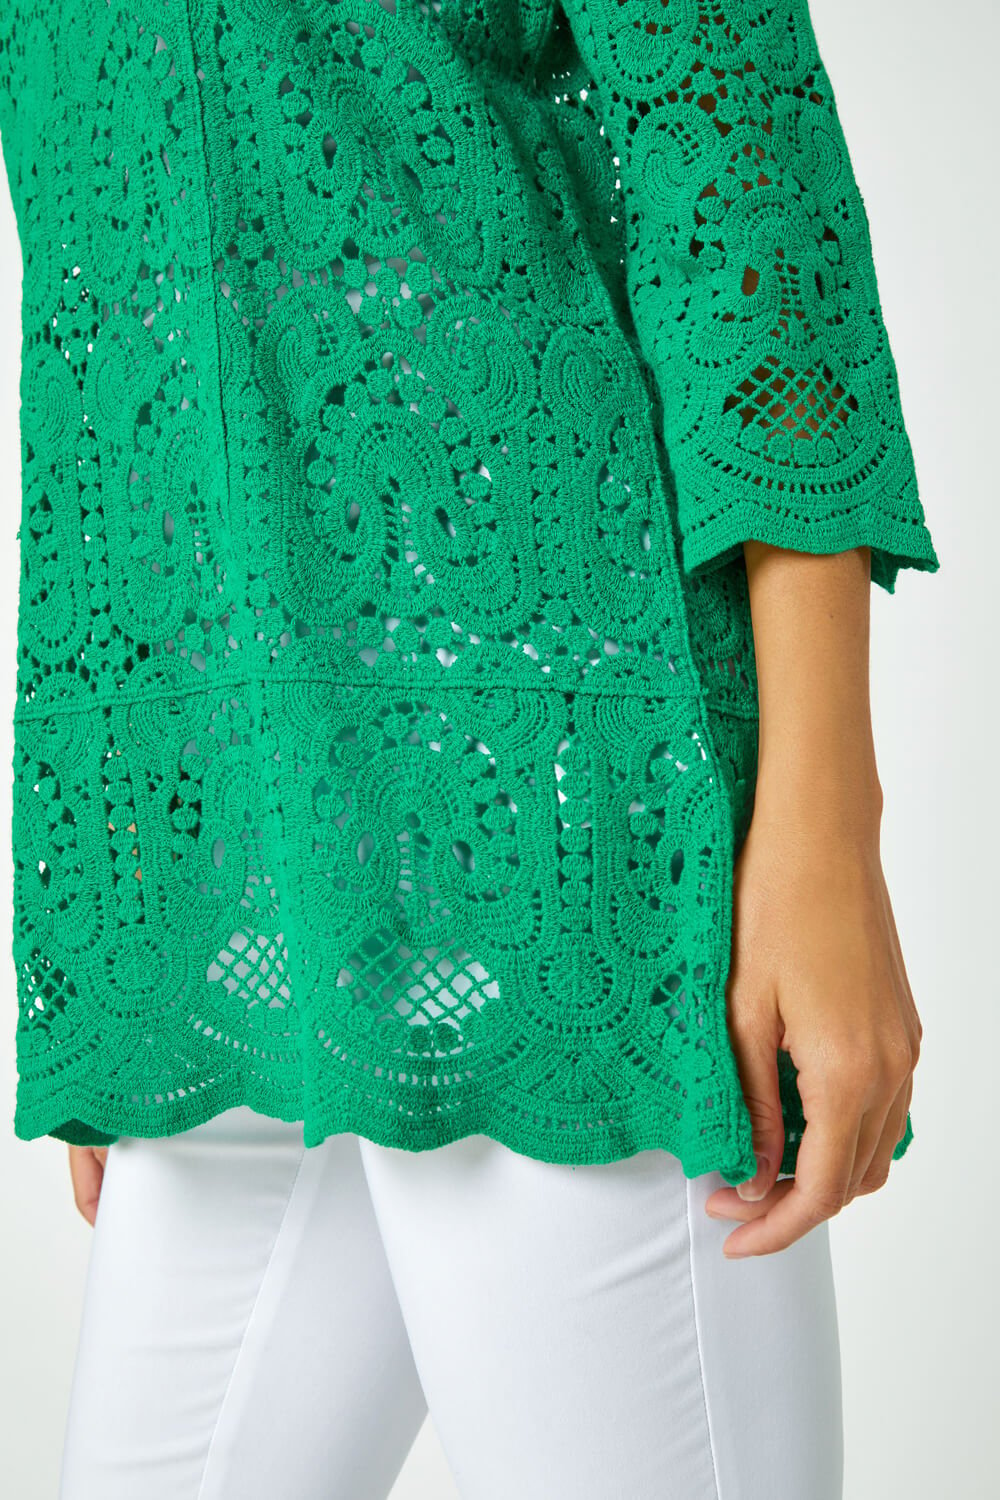 Jade Cotton Crochet Tunic Top, Image 5 of 5